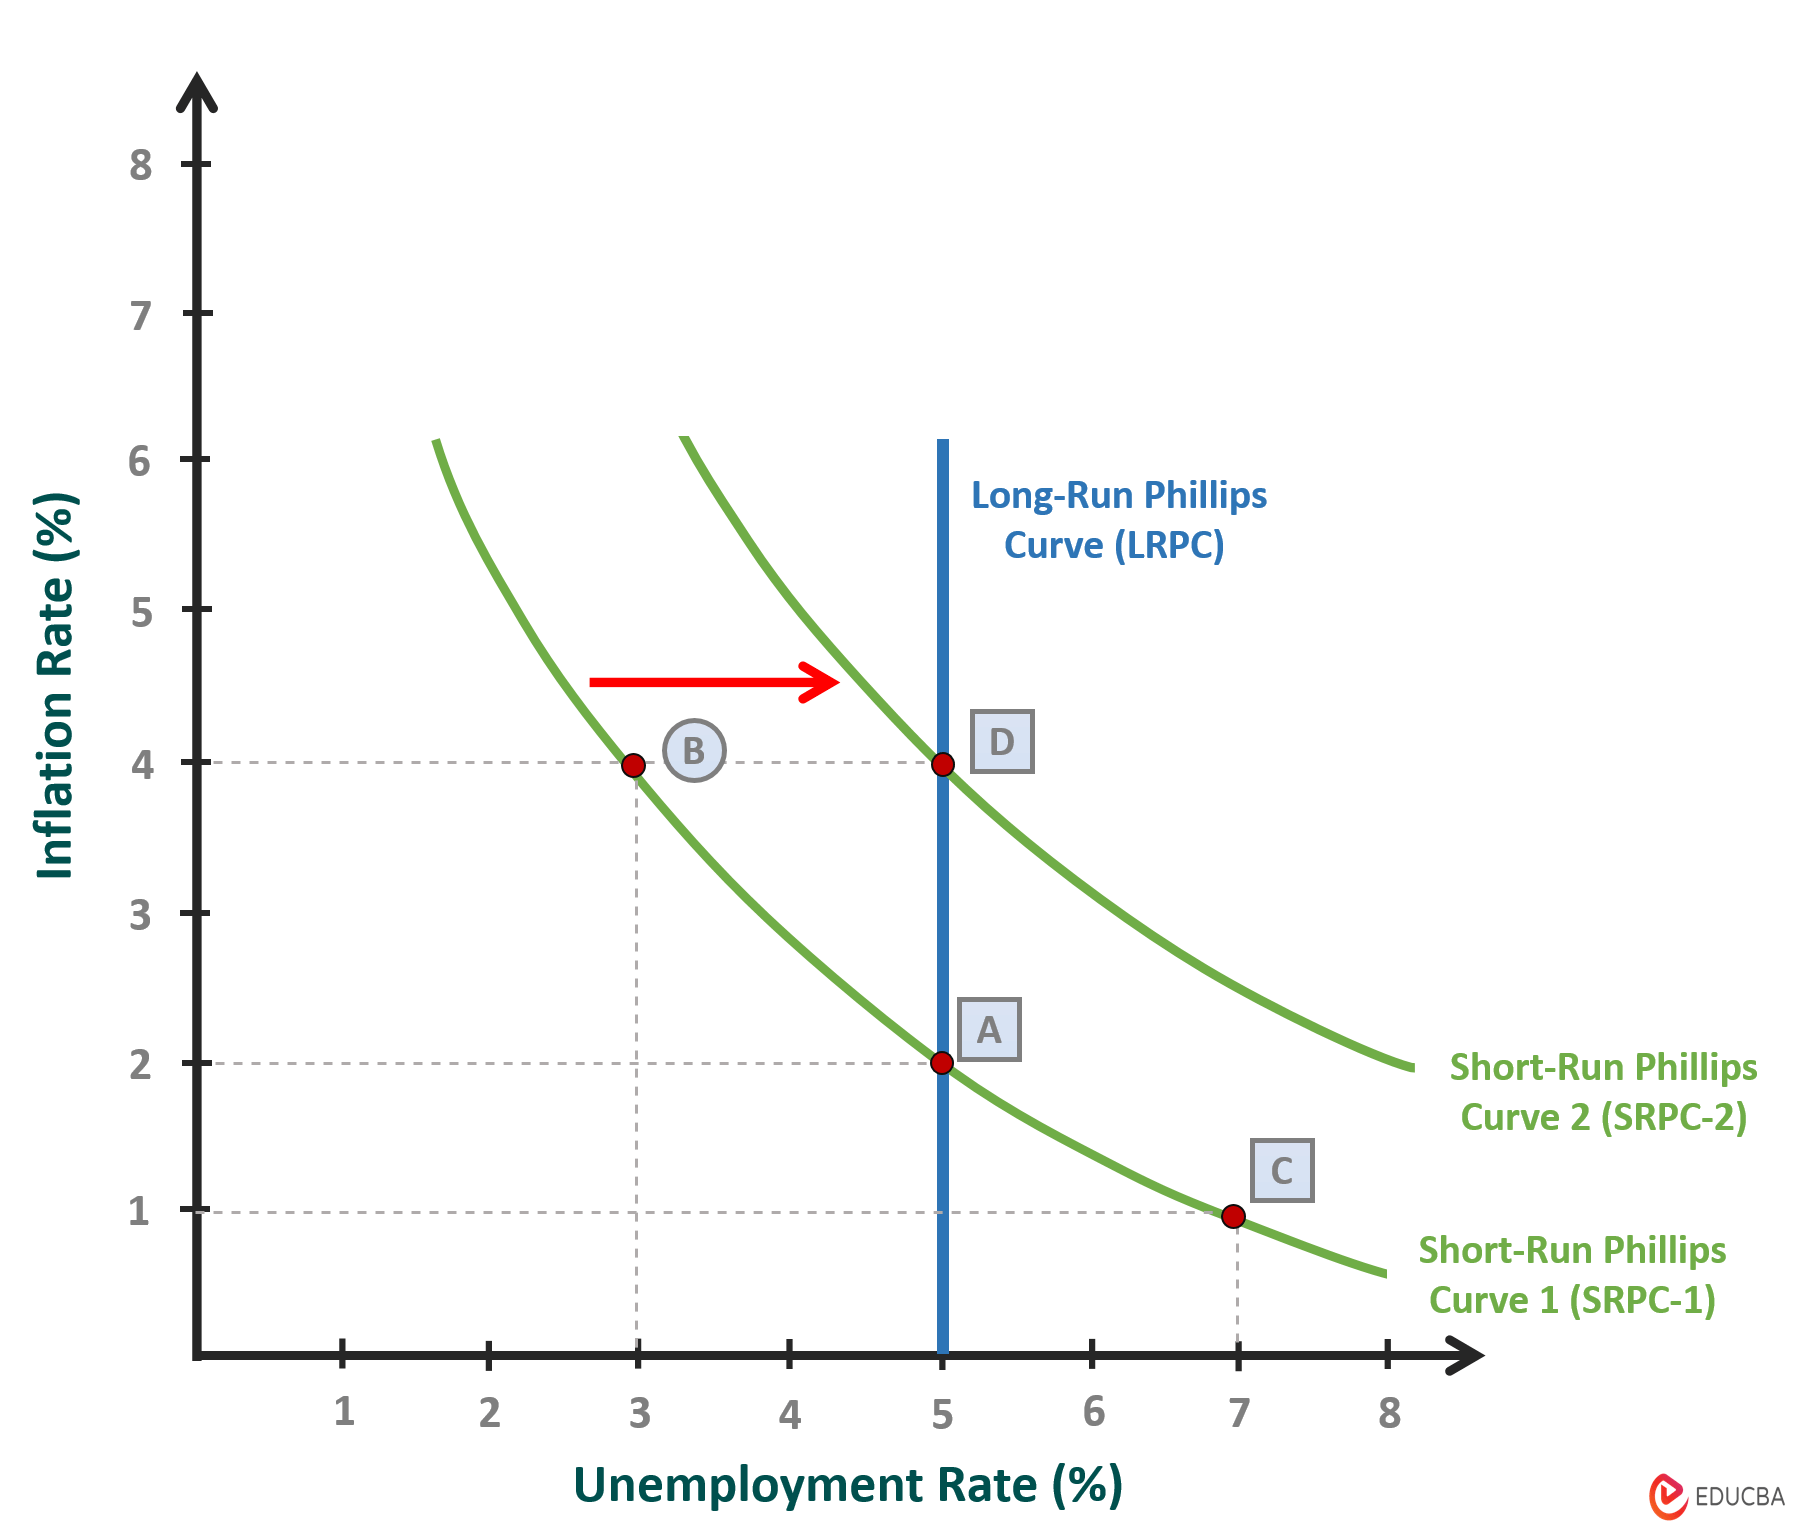 Long-Run Phillips Curve